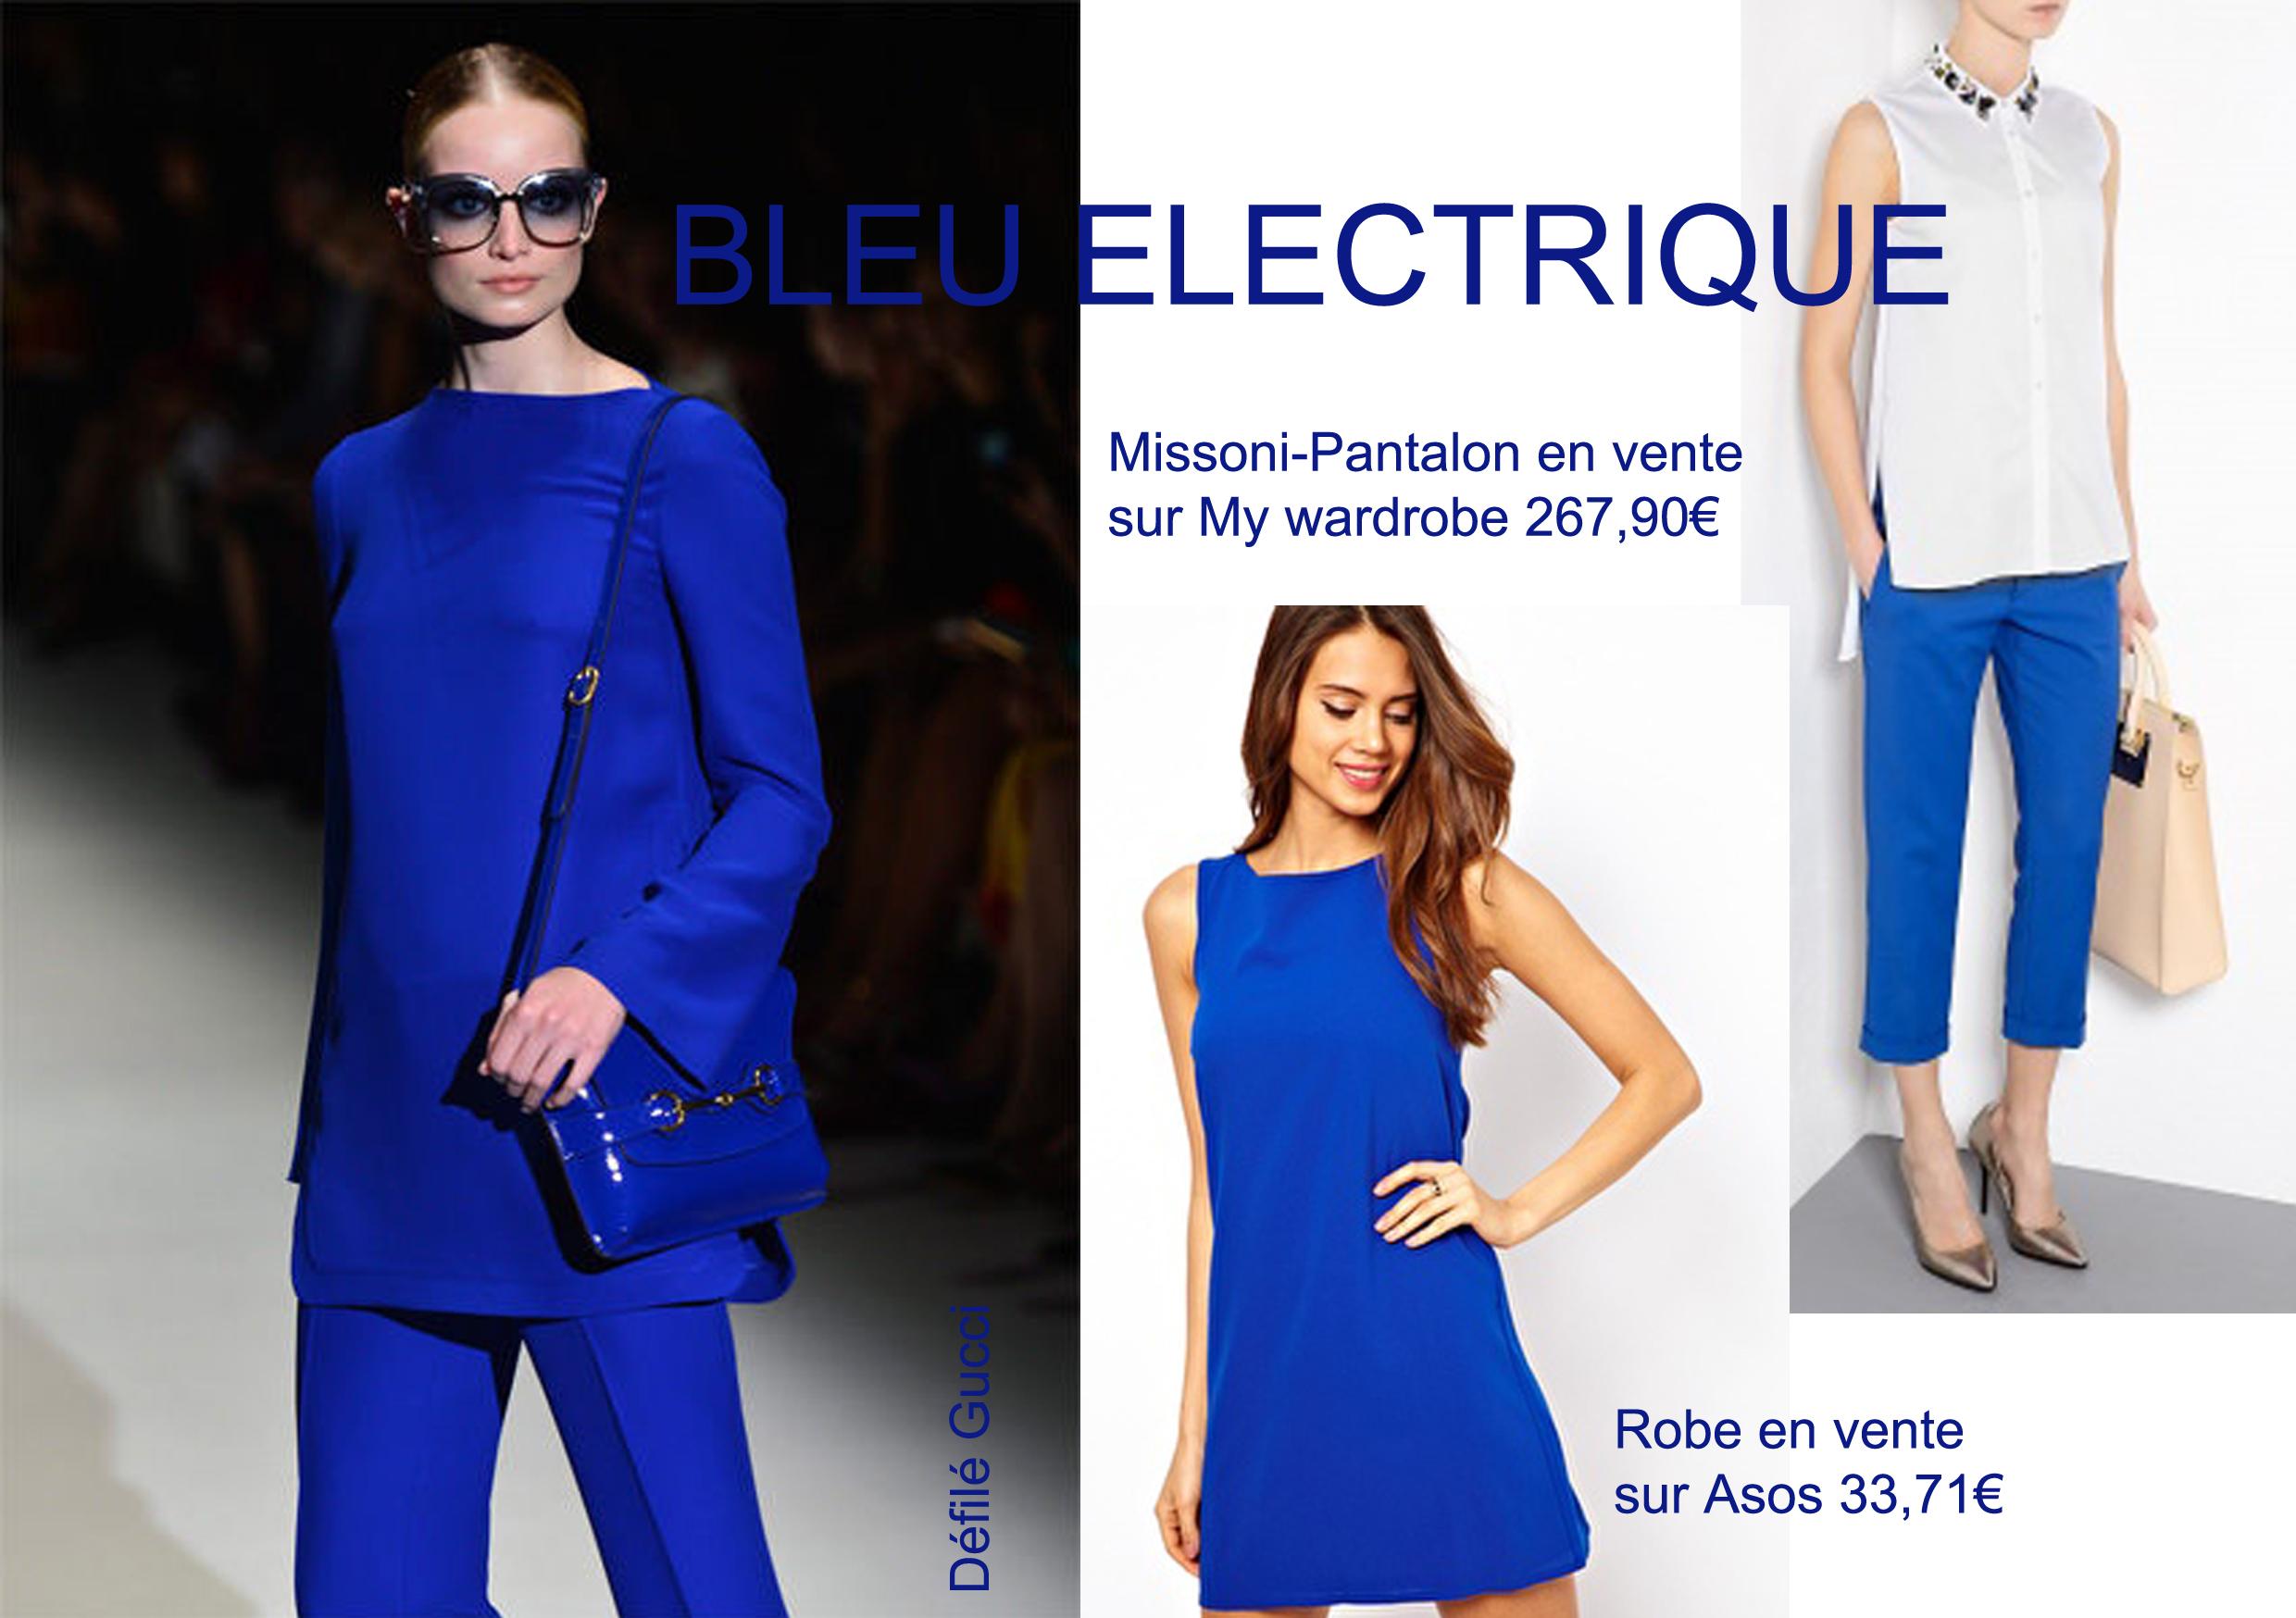 Bleu electrique mode tendance printemps 2013 mode femme inspiration gucci